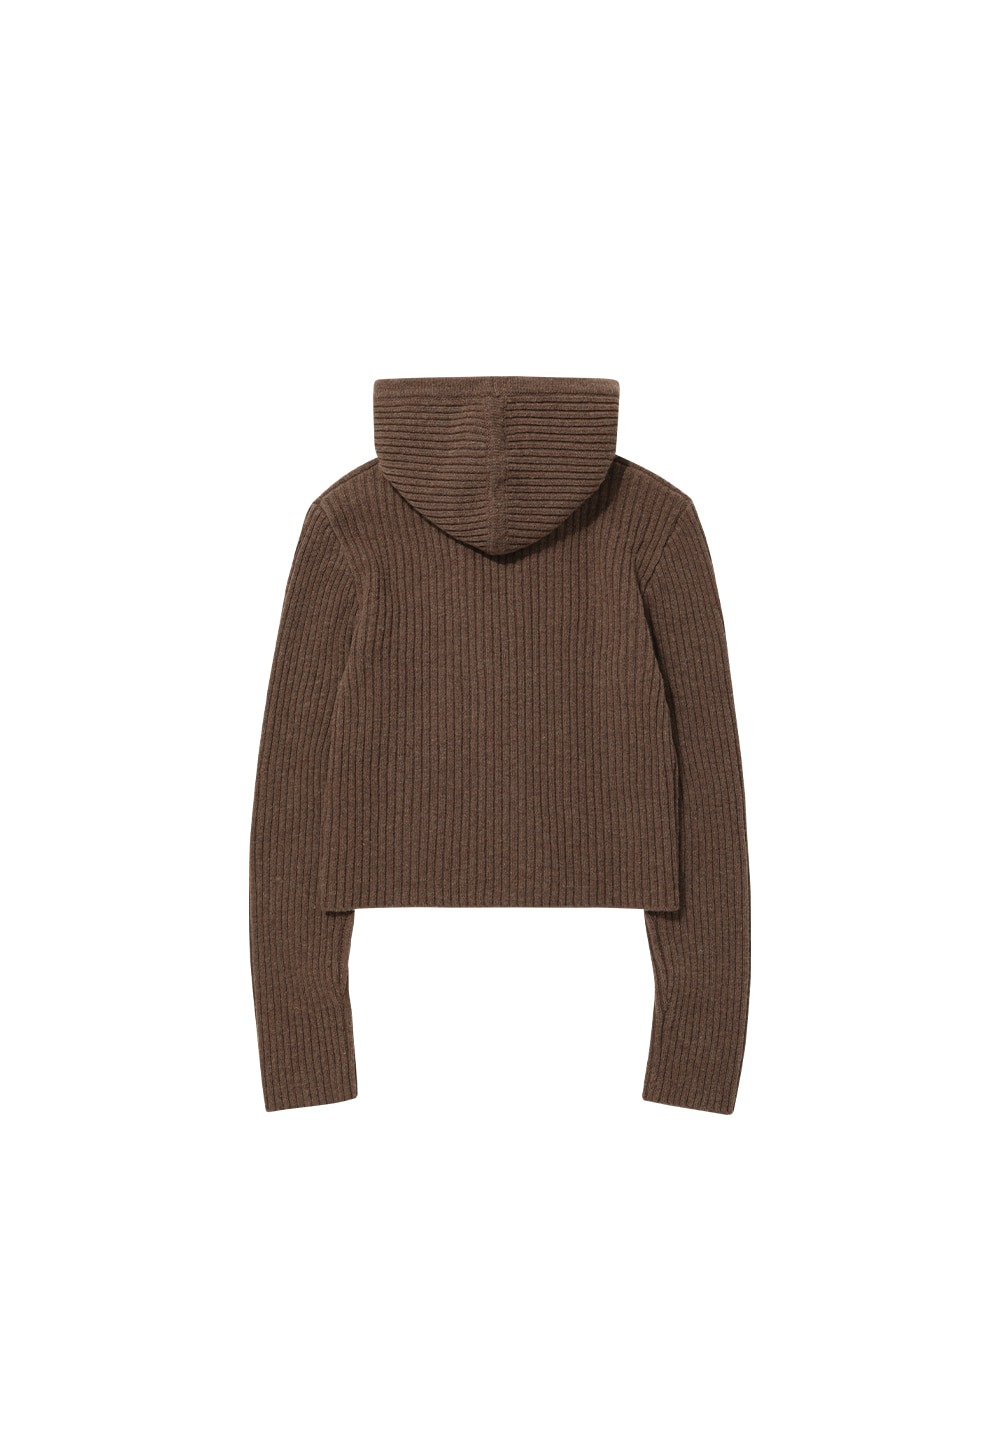 Signature slim hood knit zip-up - BROWN